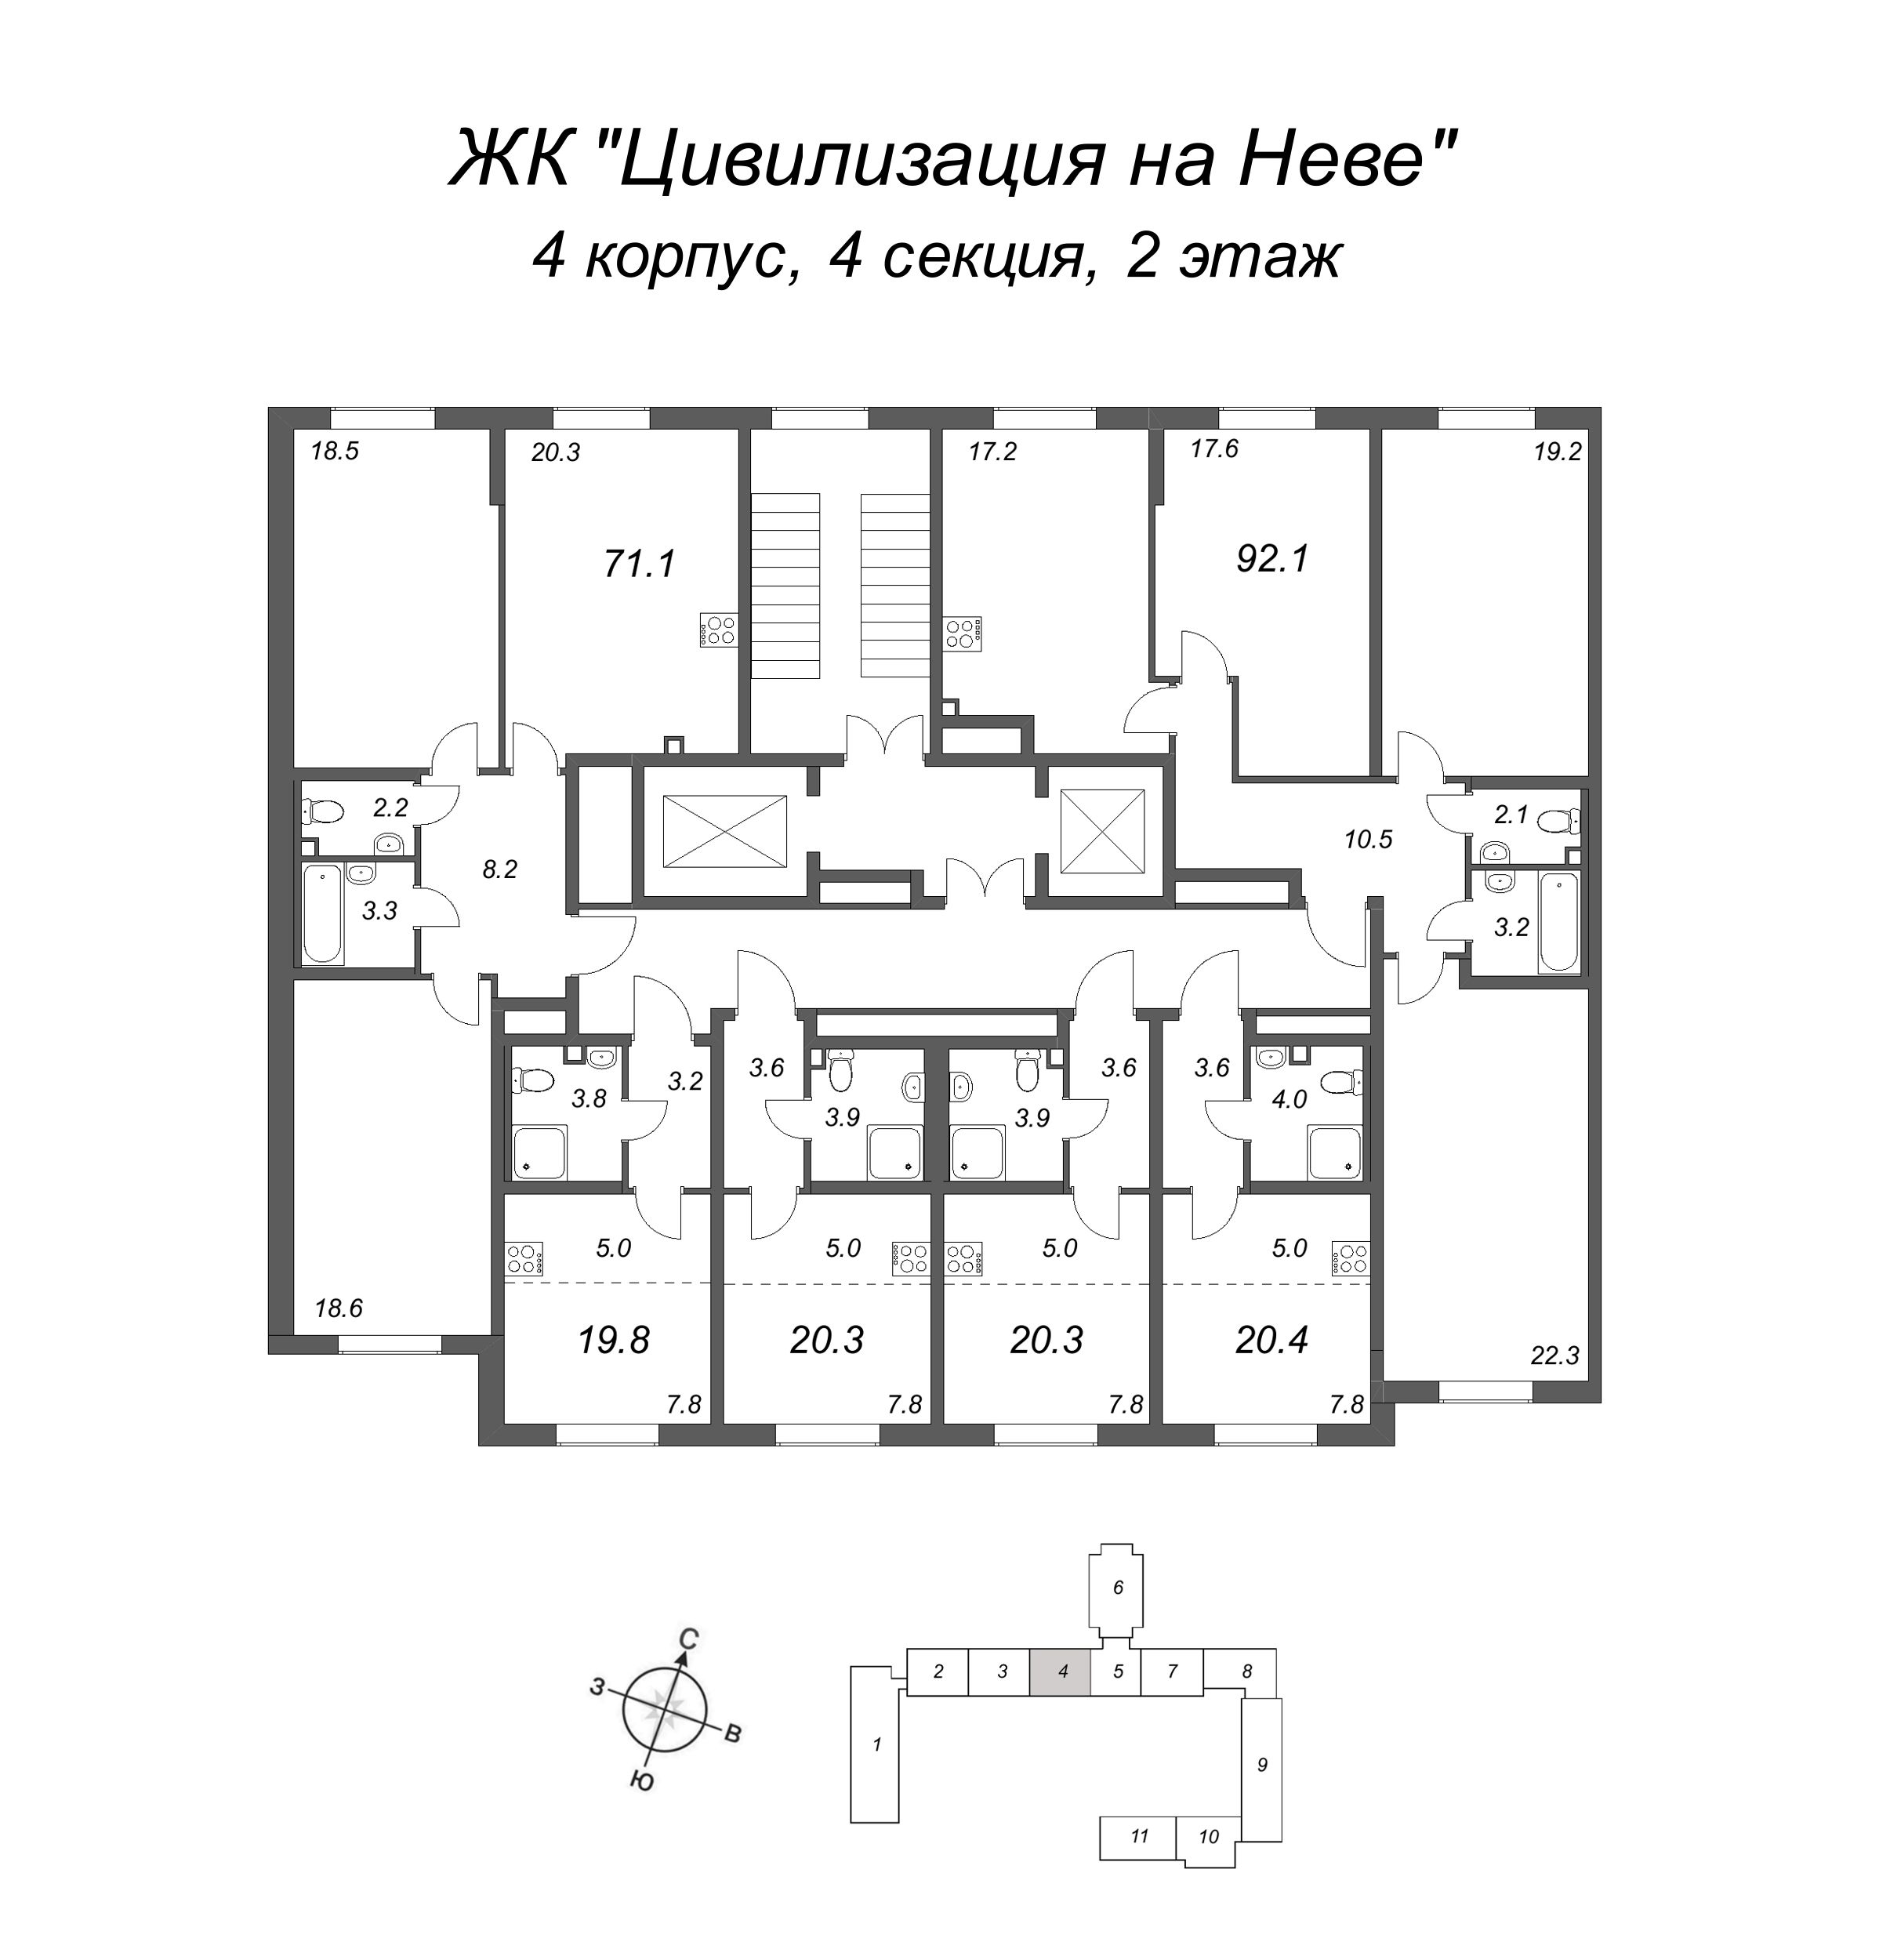 3-комнатная (Евро) квартира, 71.1 м² - планировка этажа